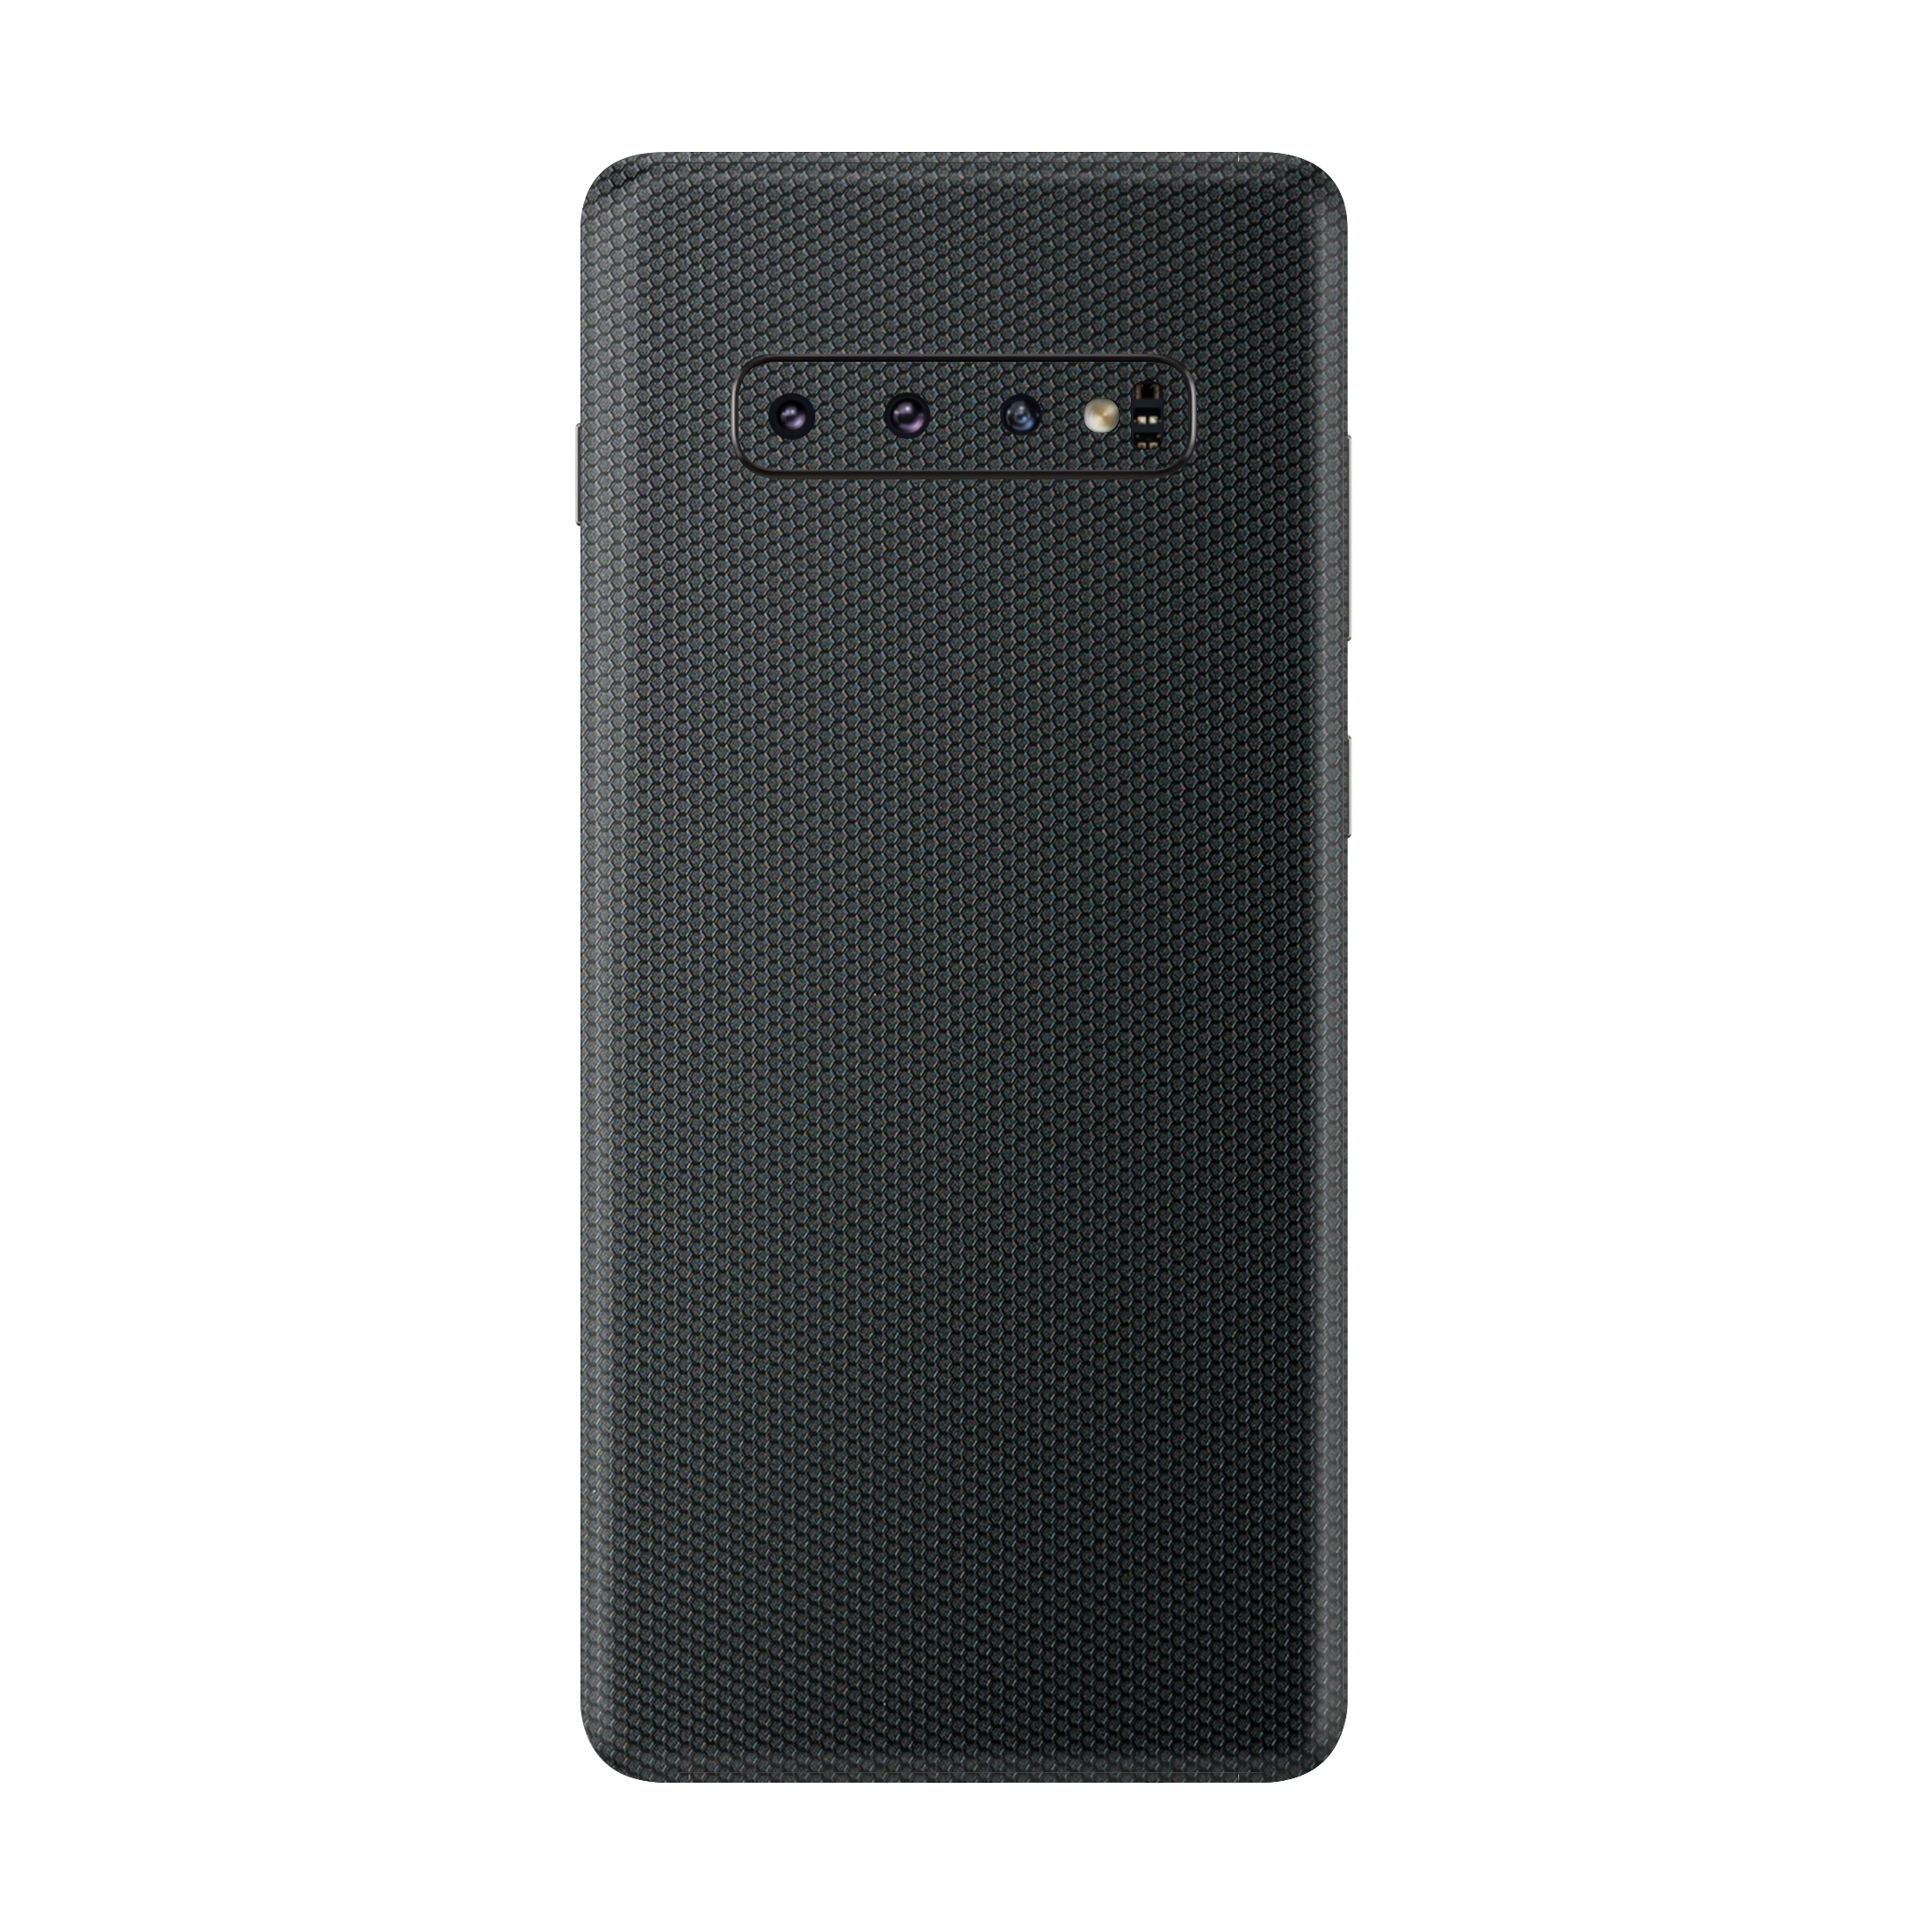 Matrix Black Skin for Samsung S10 Plus